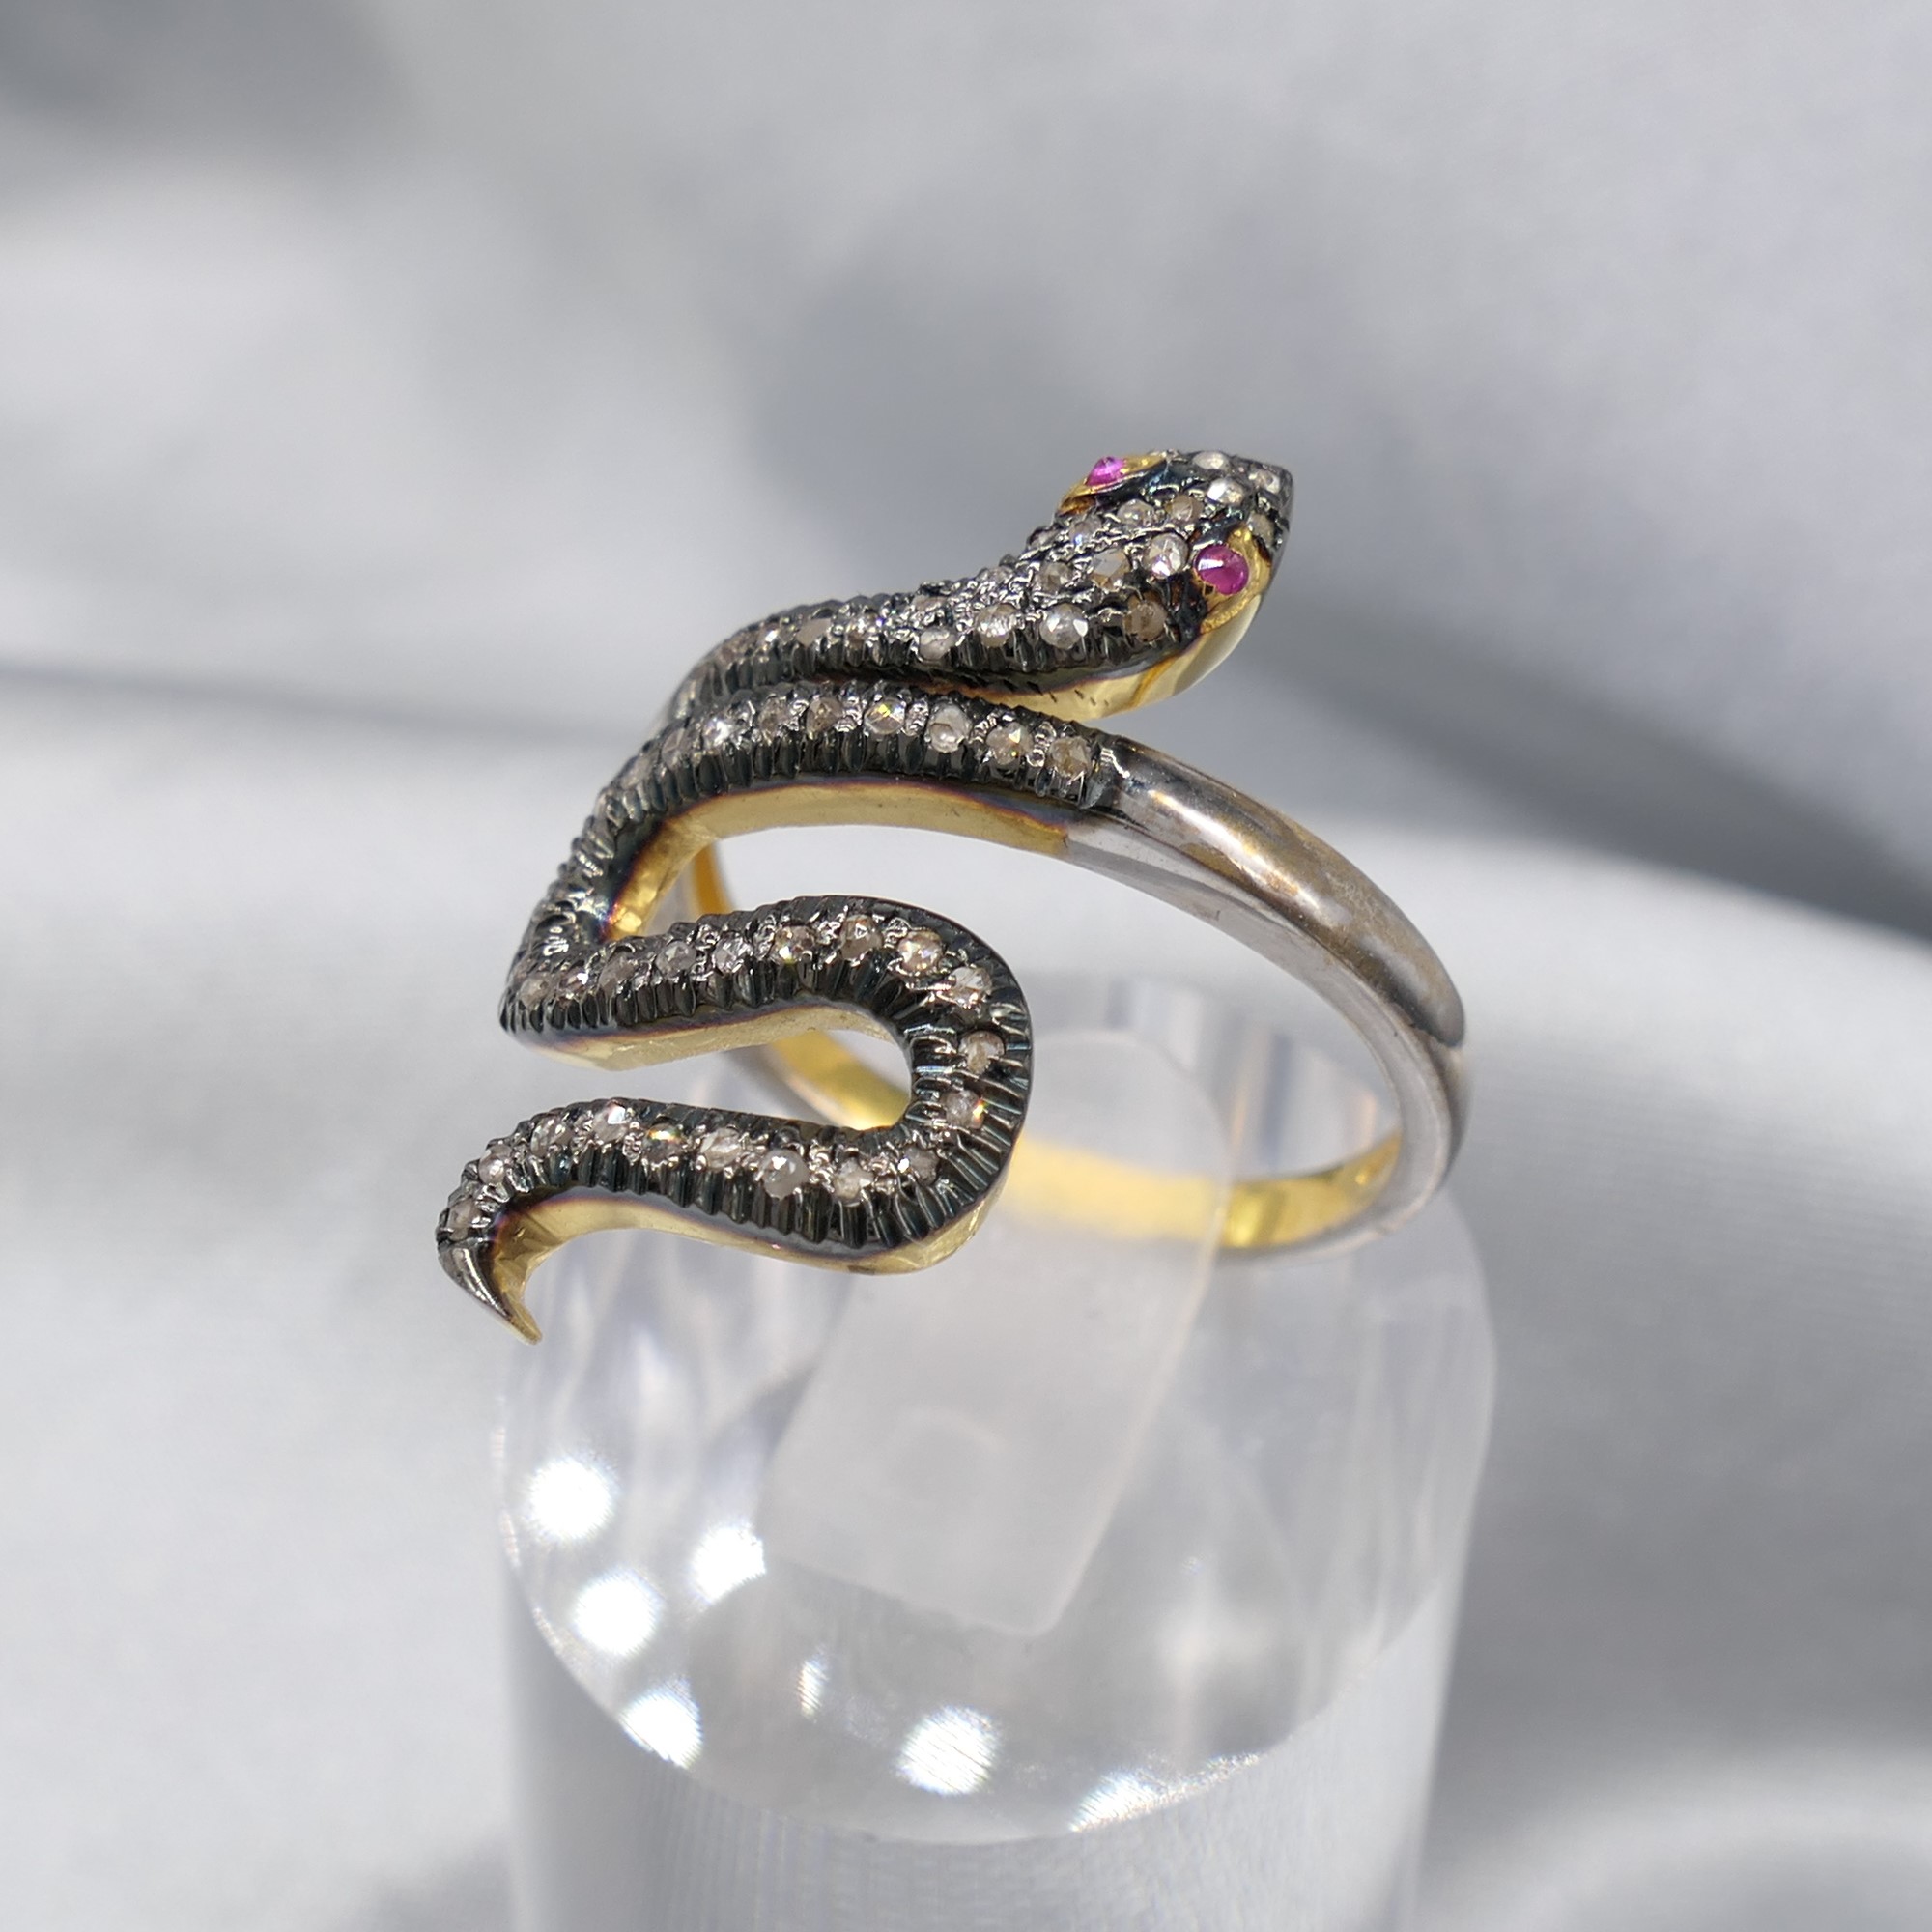 Unusual handmade diamond and ruby snake ring - Image 2 of 6